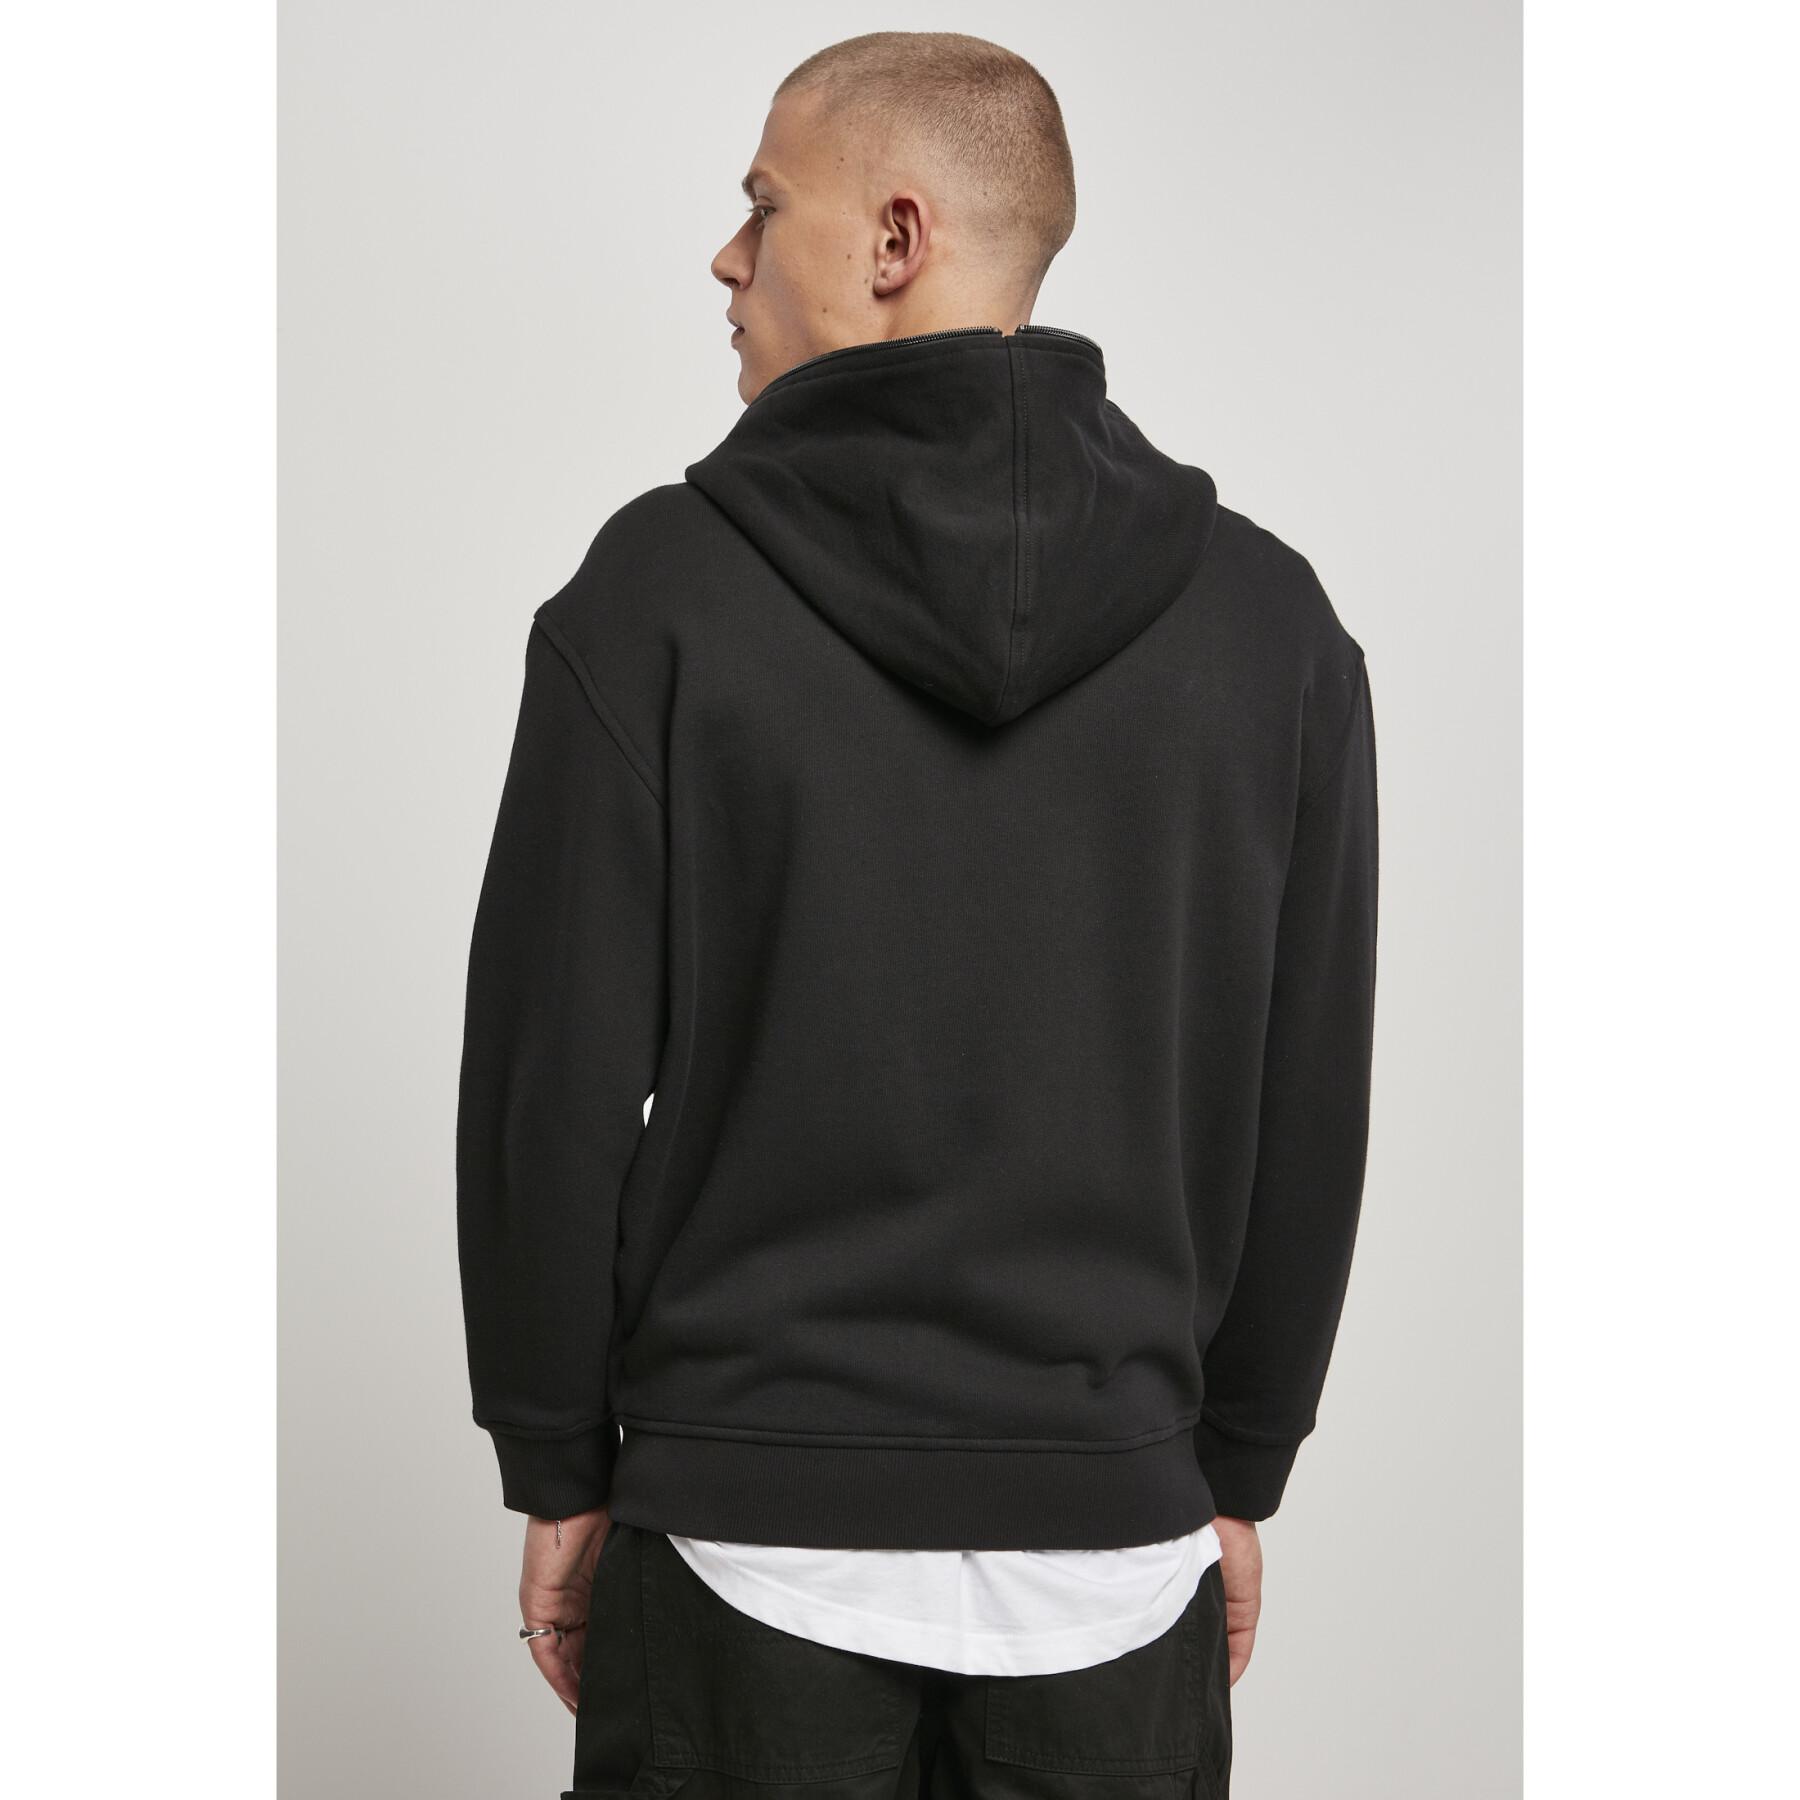 Hooded sweatshirt Urban Classics organic full zip (large sizes)